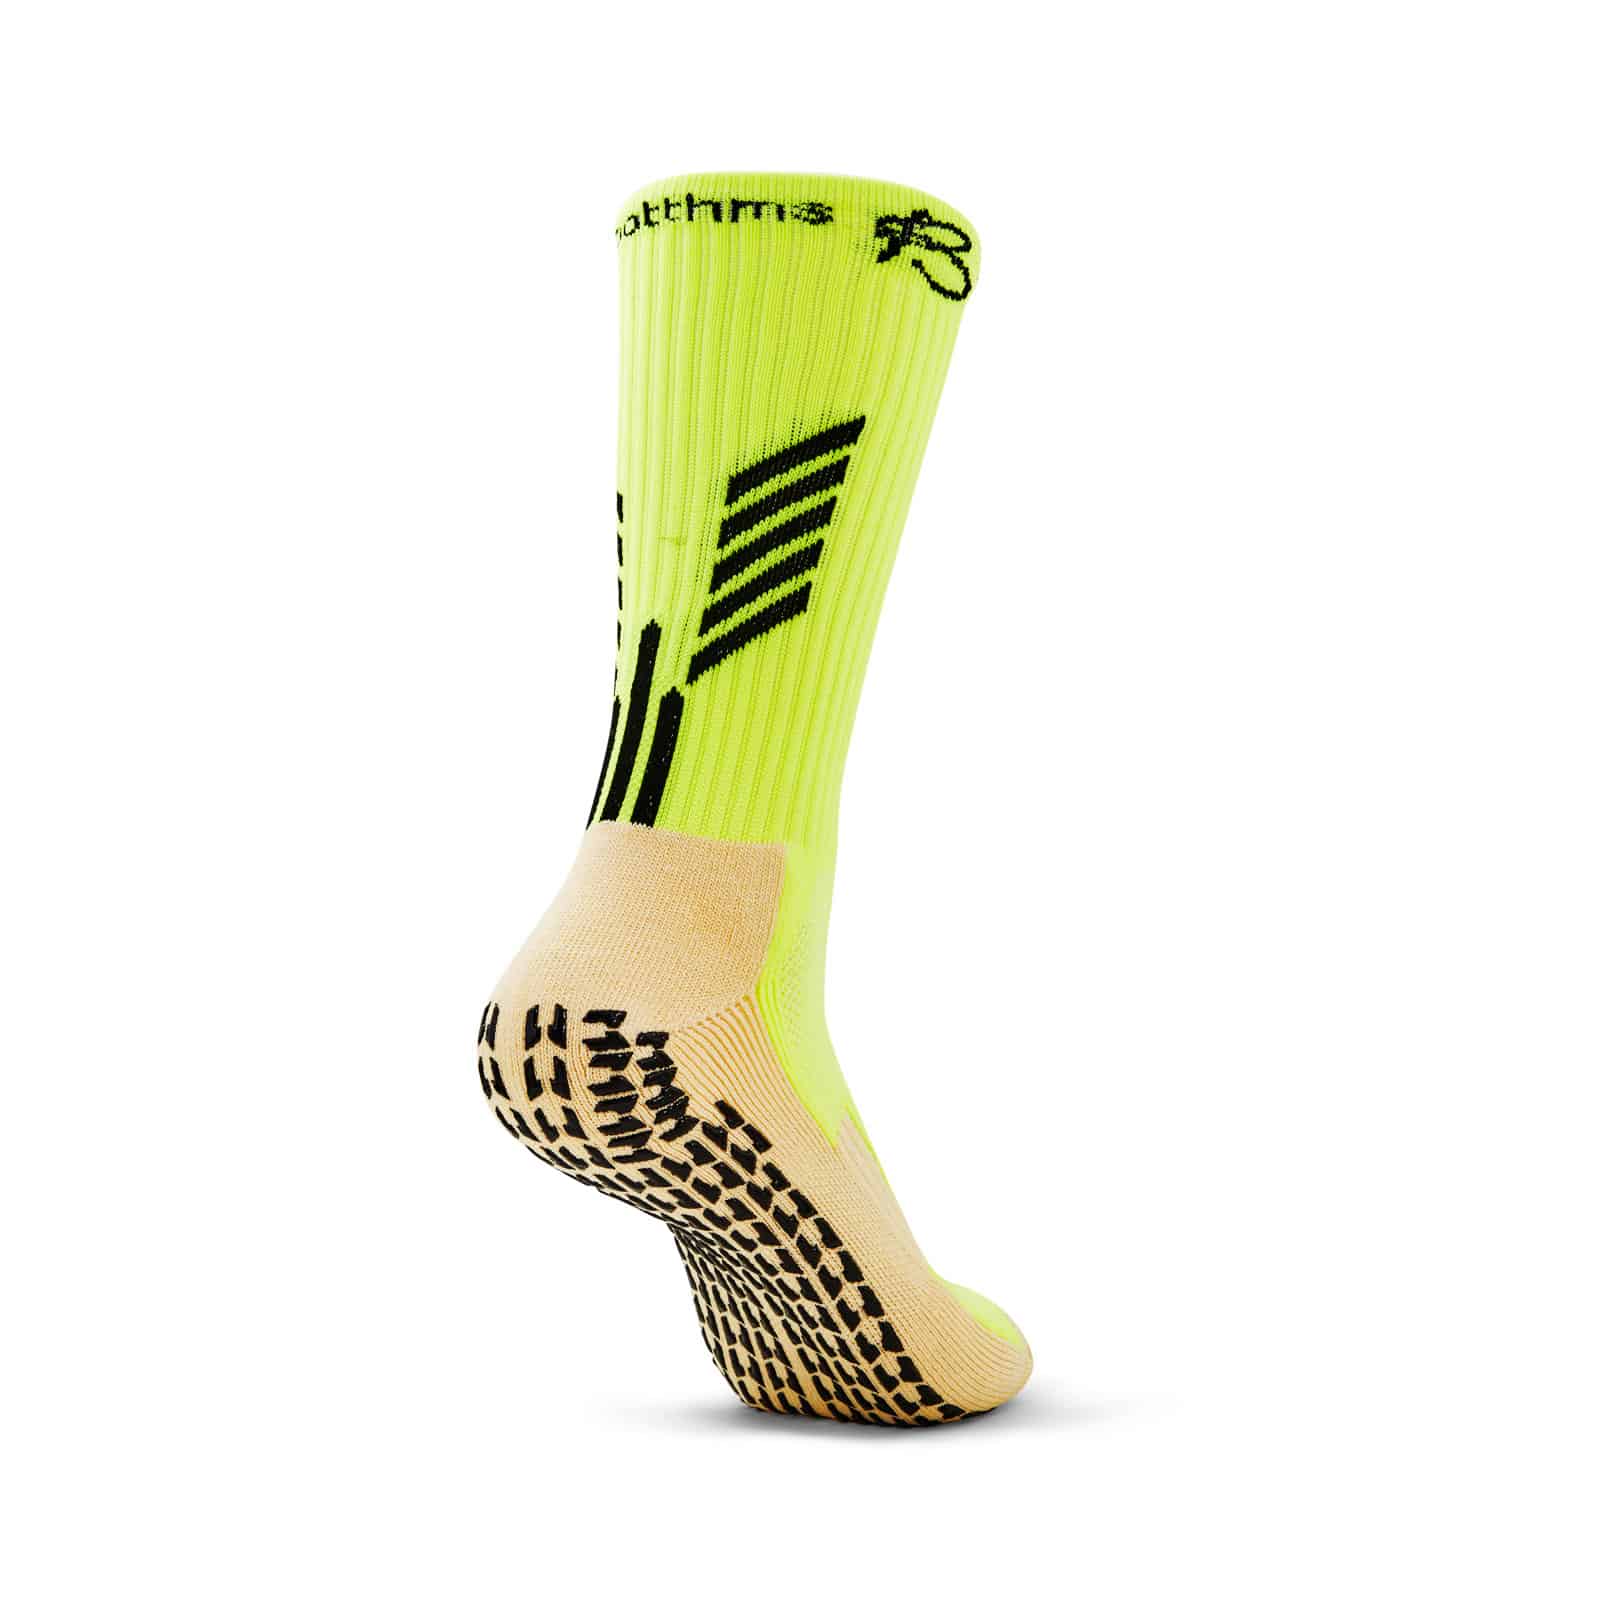 botthms Neon Yellow Grip Socks